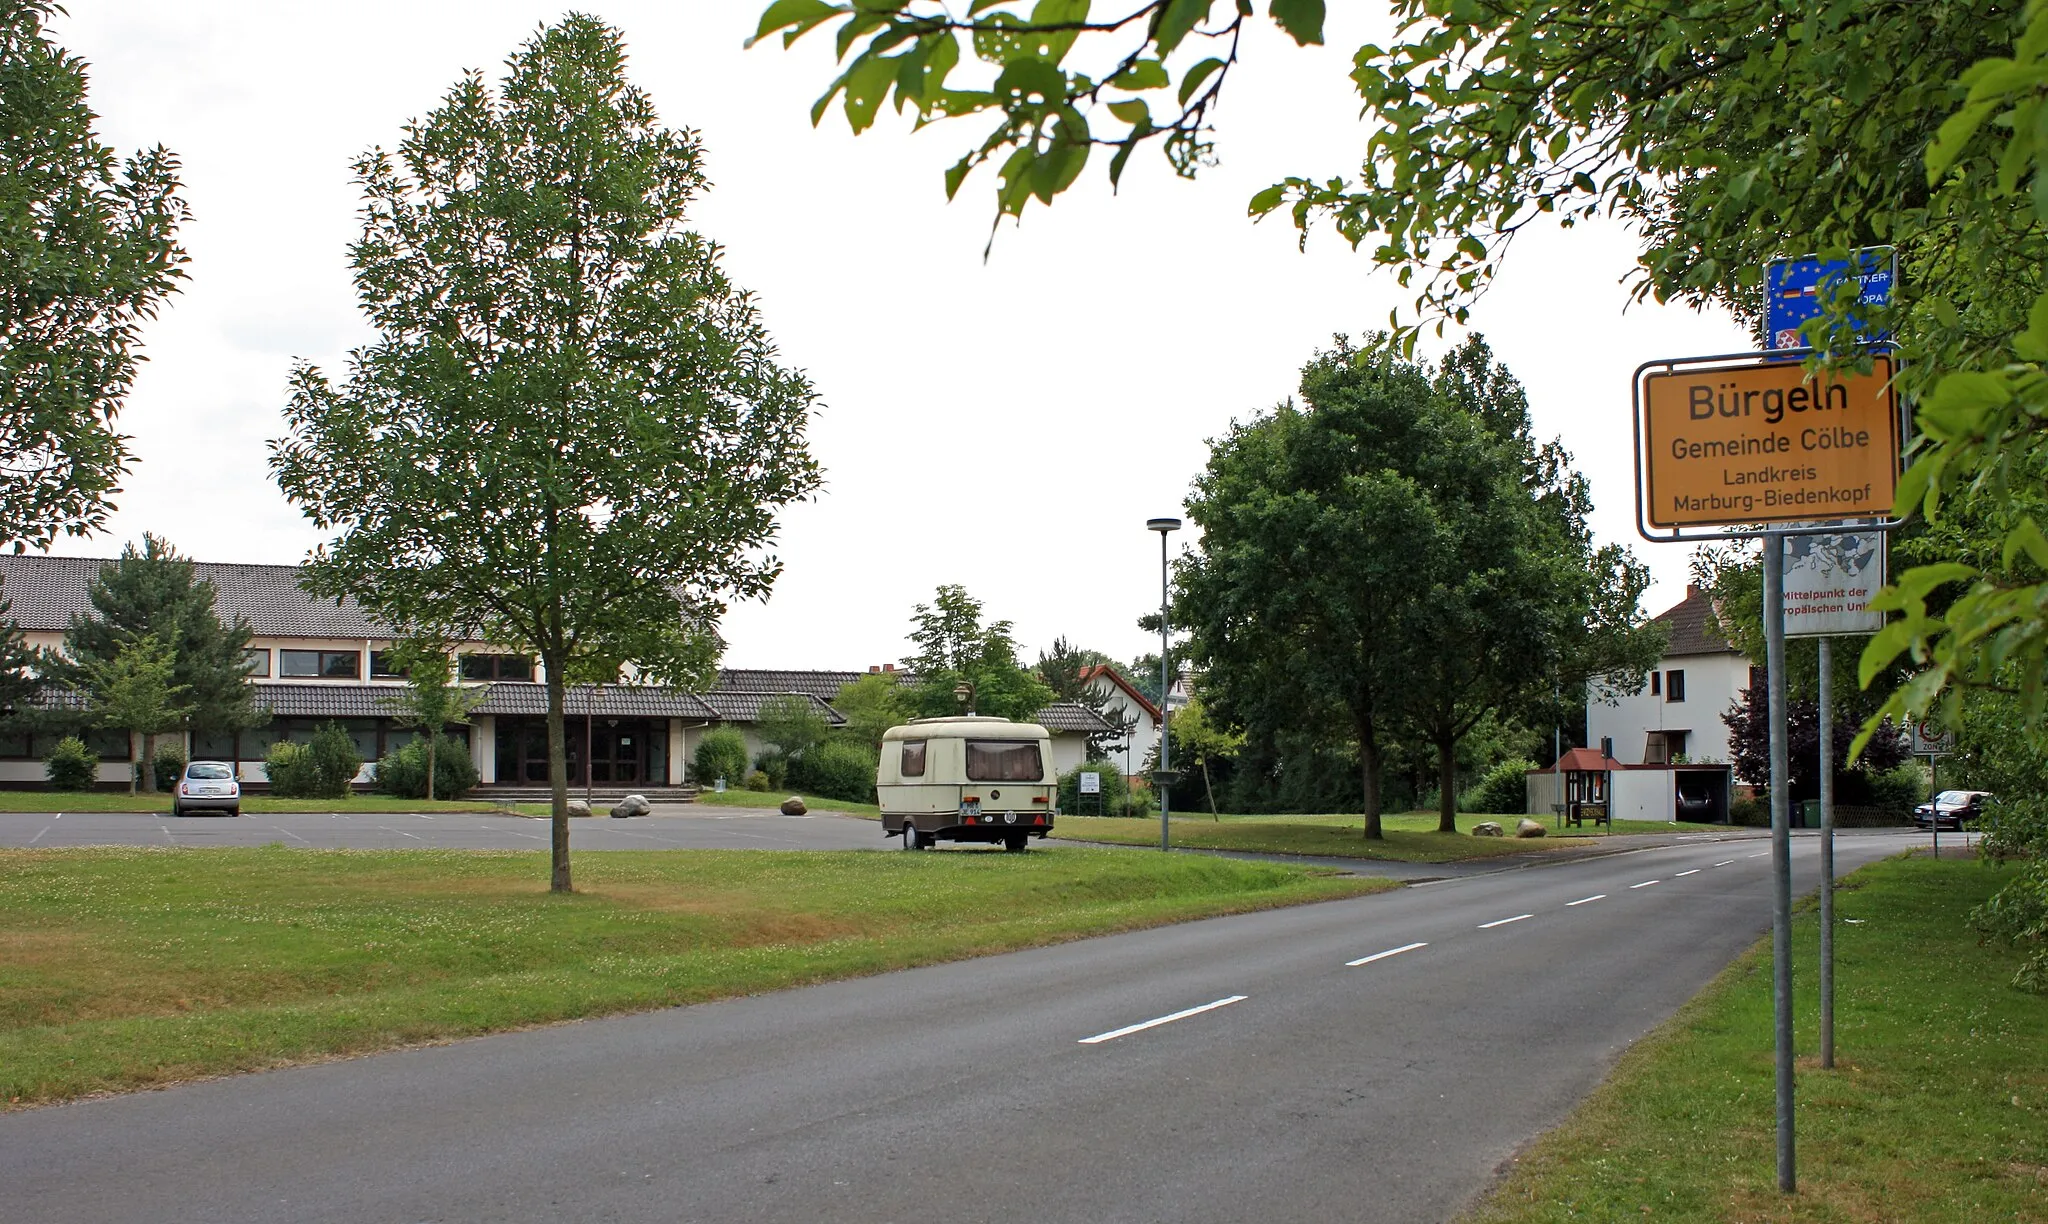 Photo showing: Northern village entry of Bürgeln, Cölbe